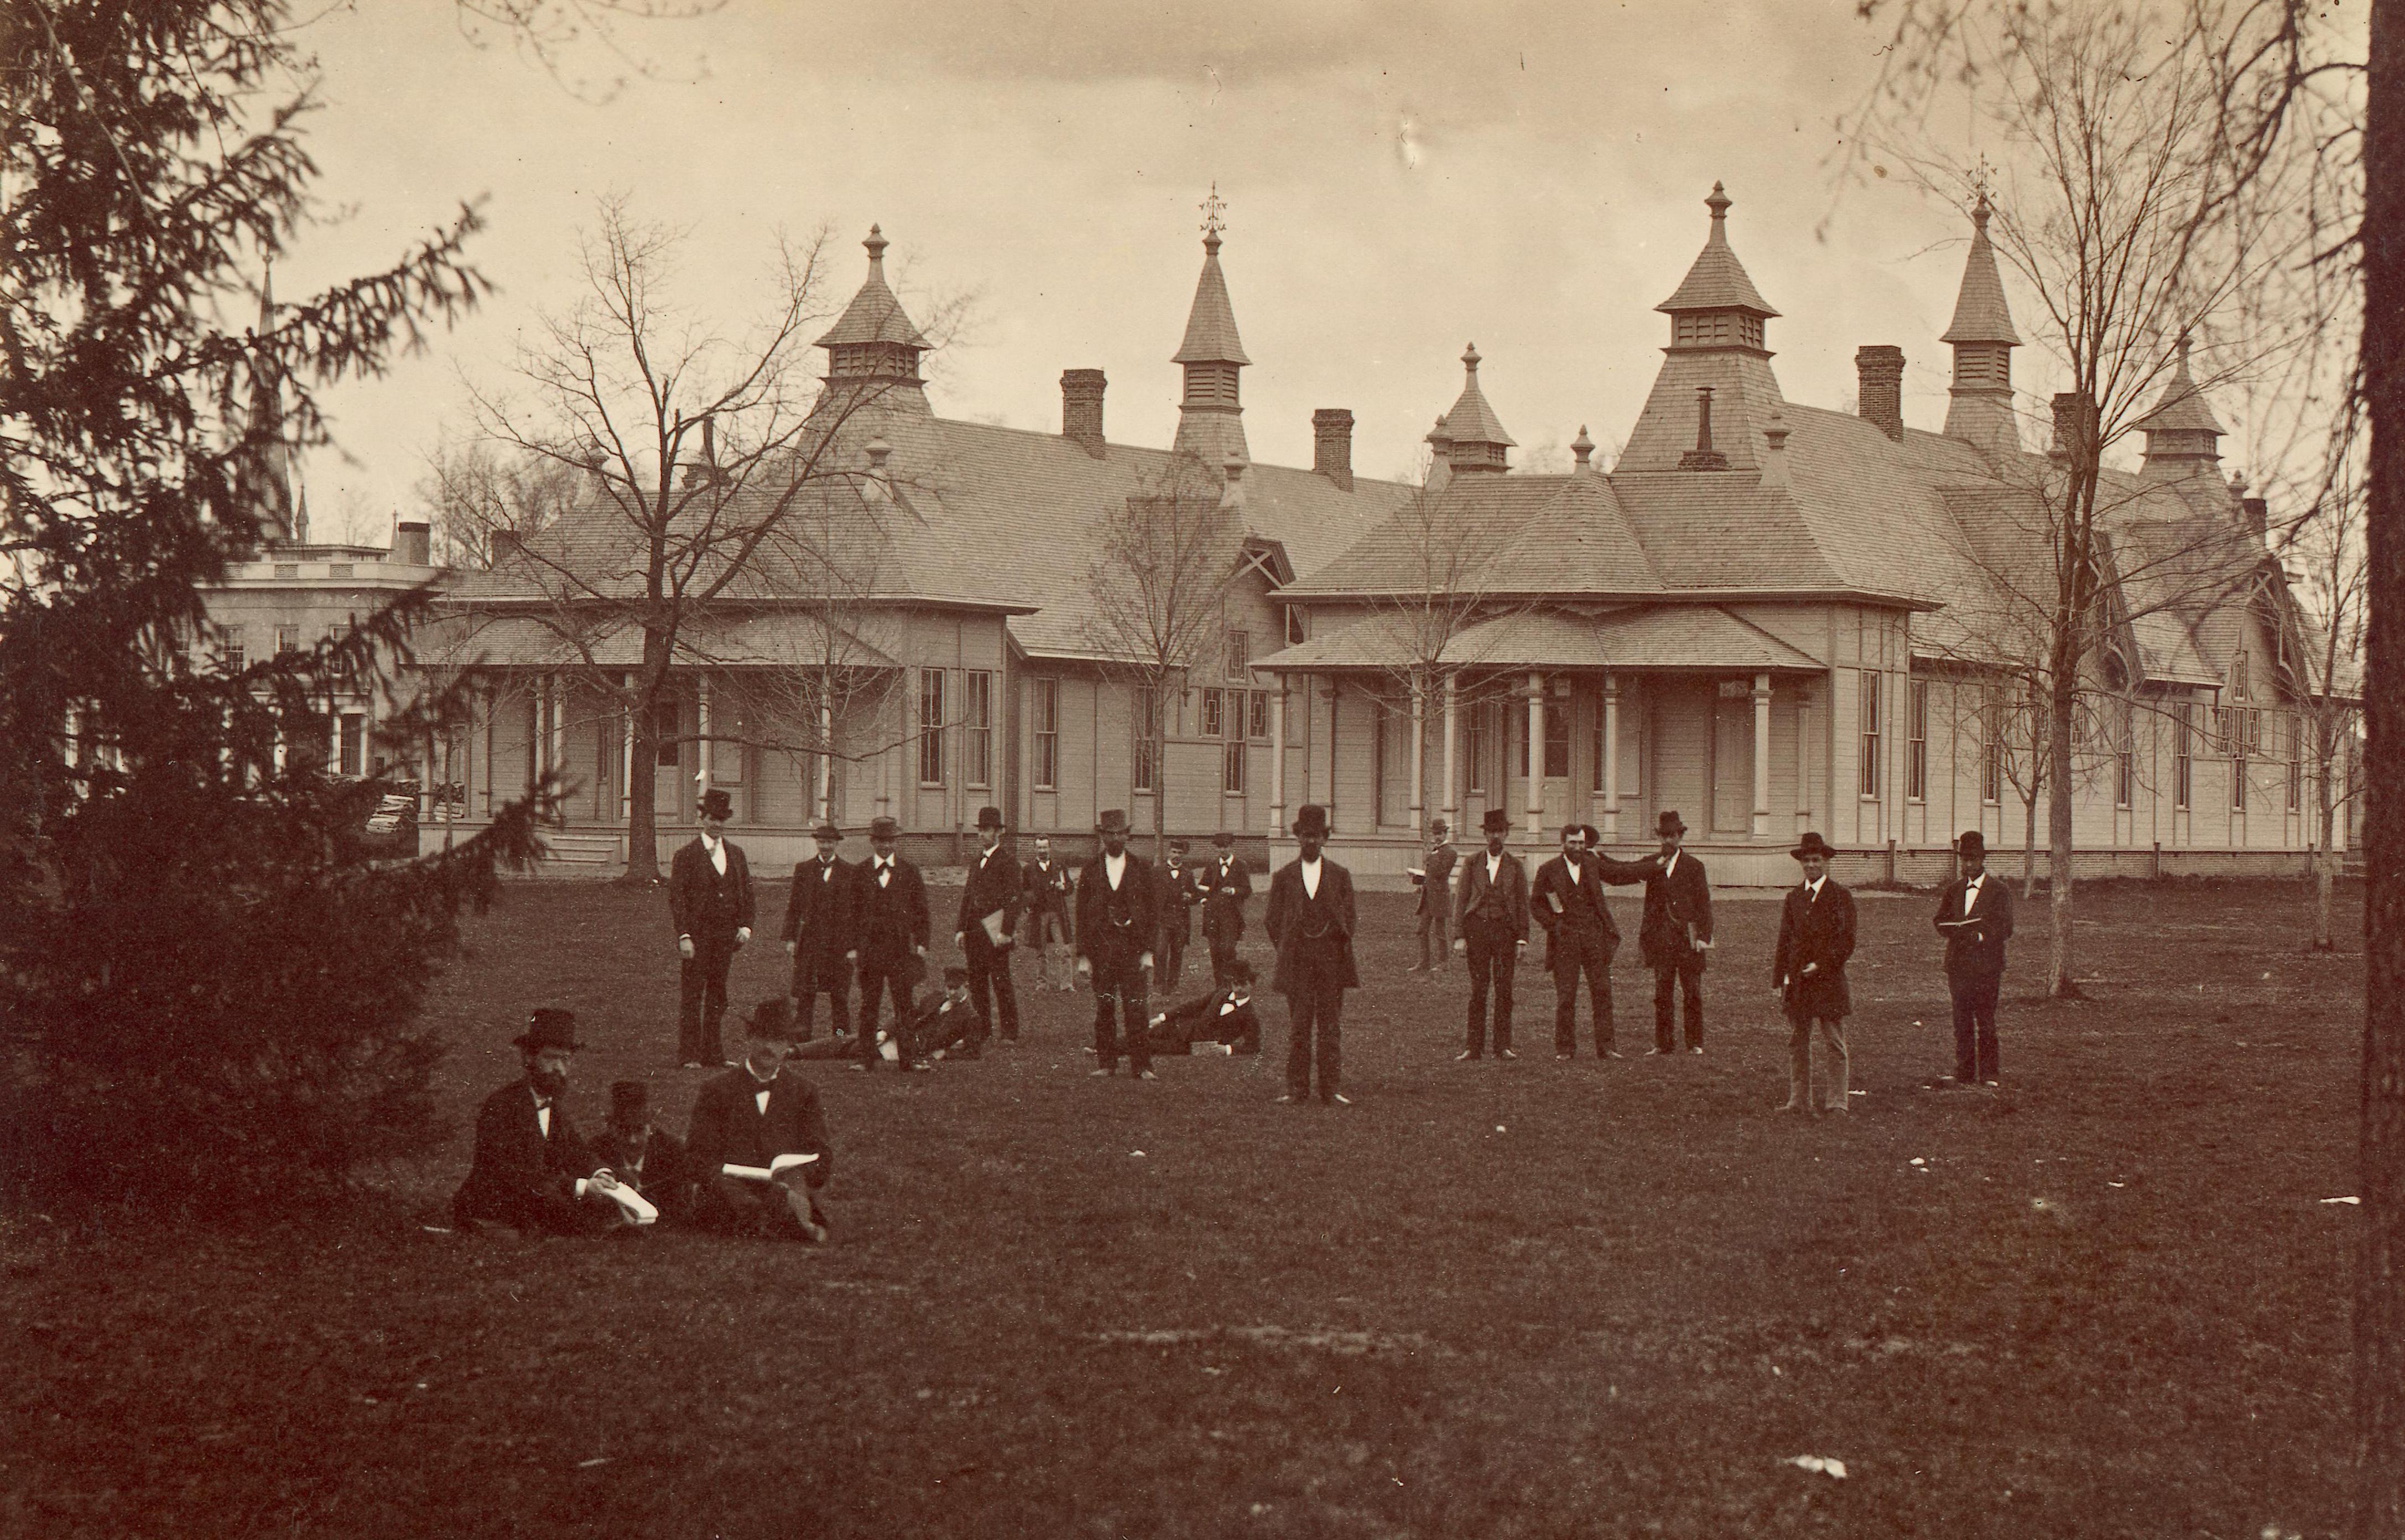 University of Michigan hospital pavilions, 1877